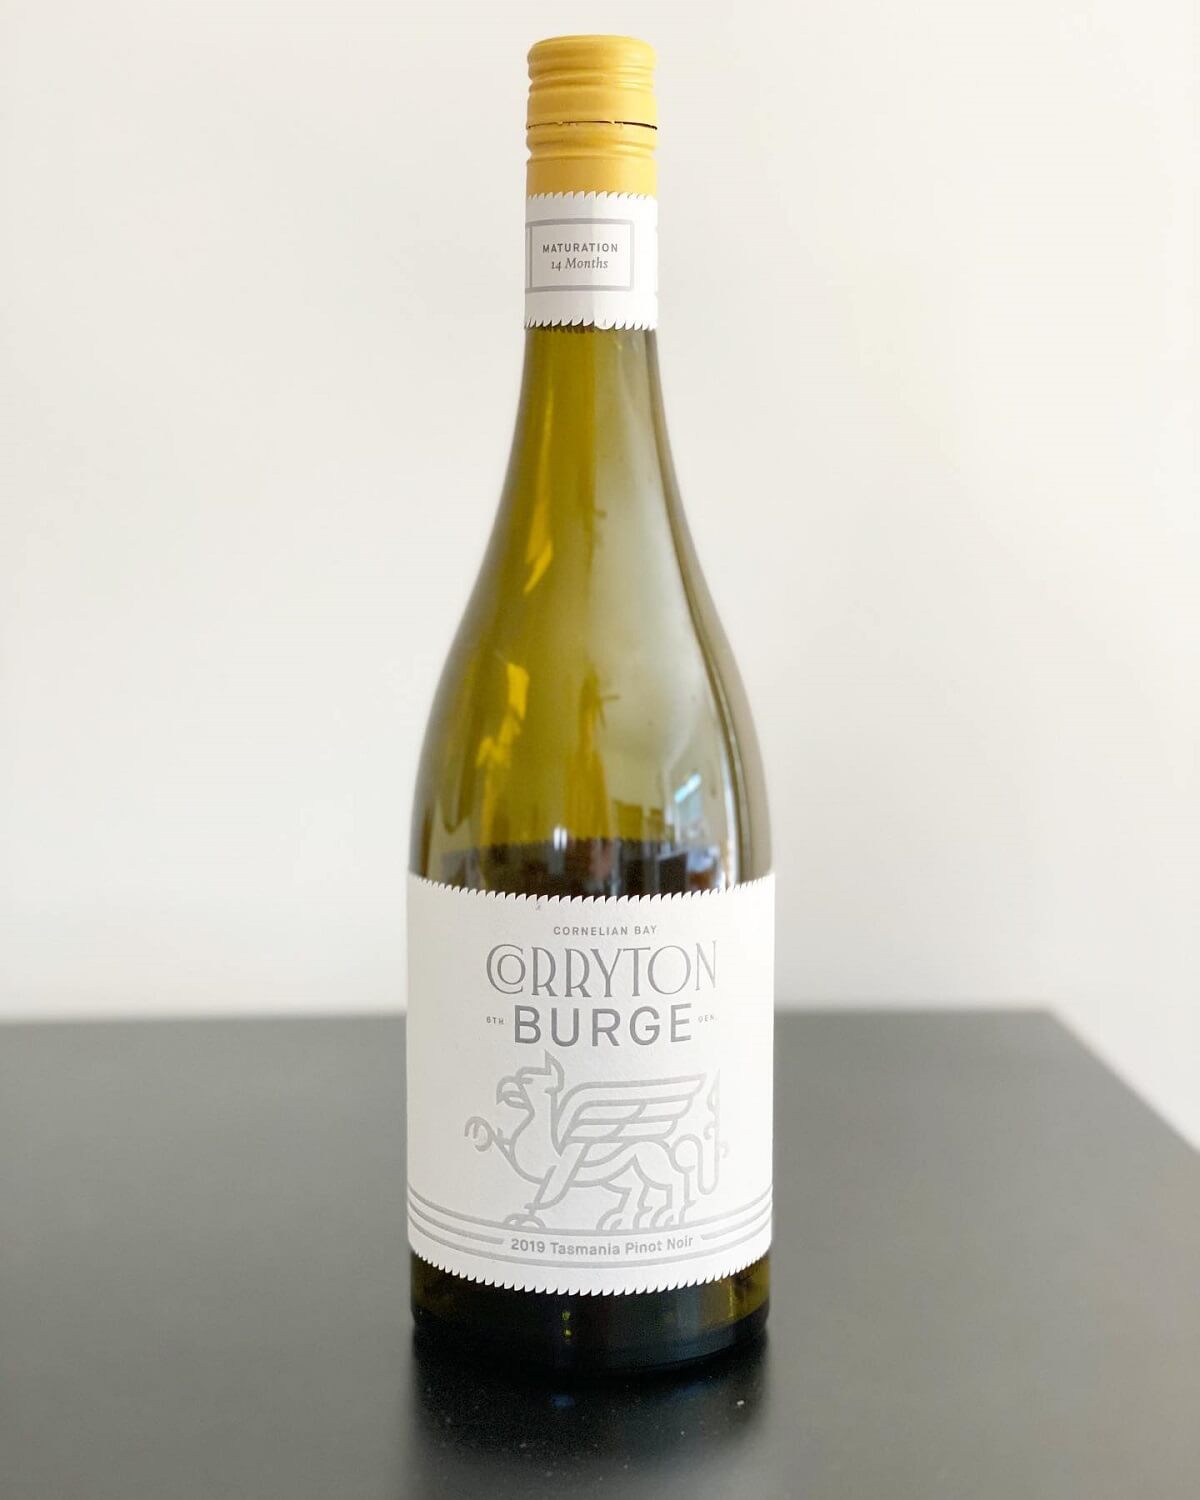 Corryton Burge 2019 Tasmanian Pinot Noir